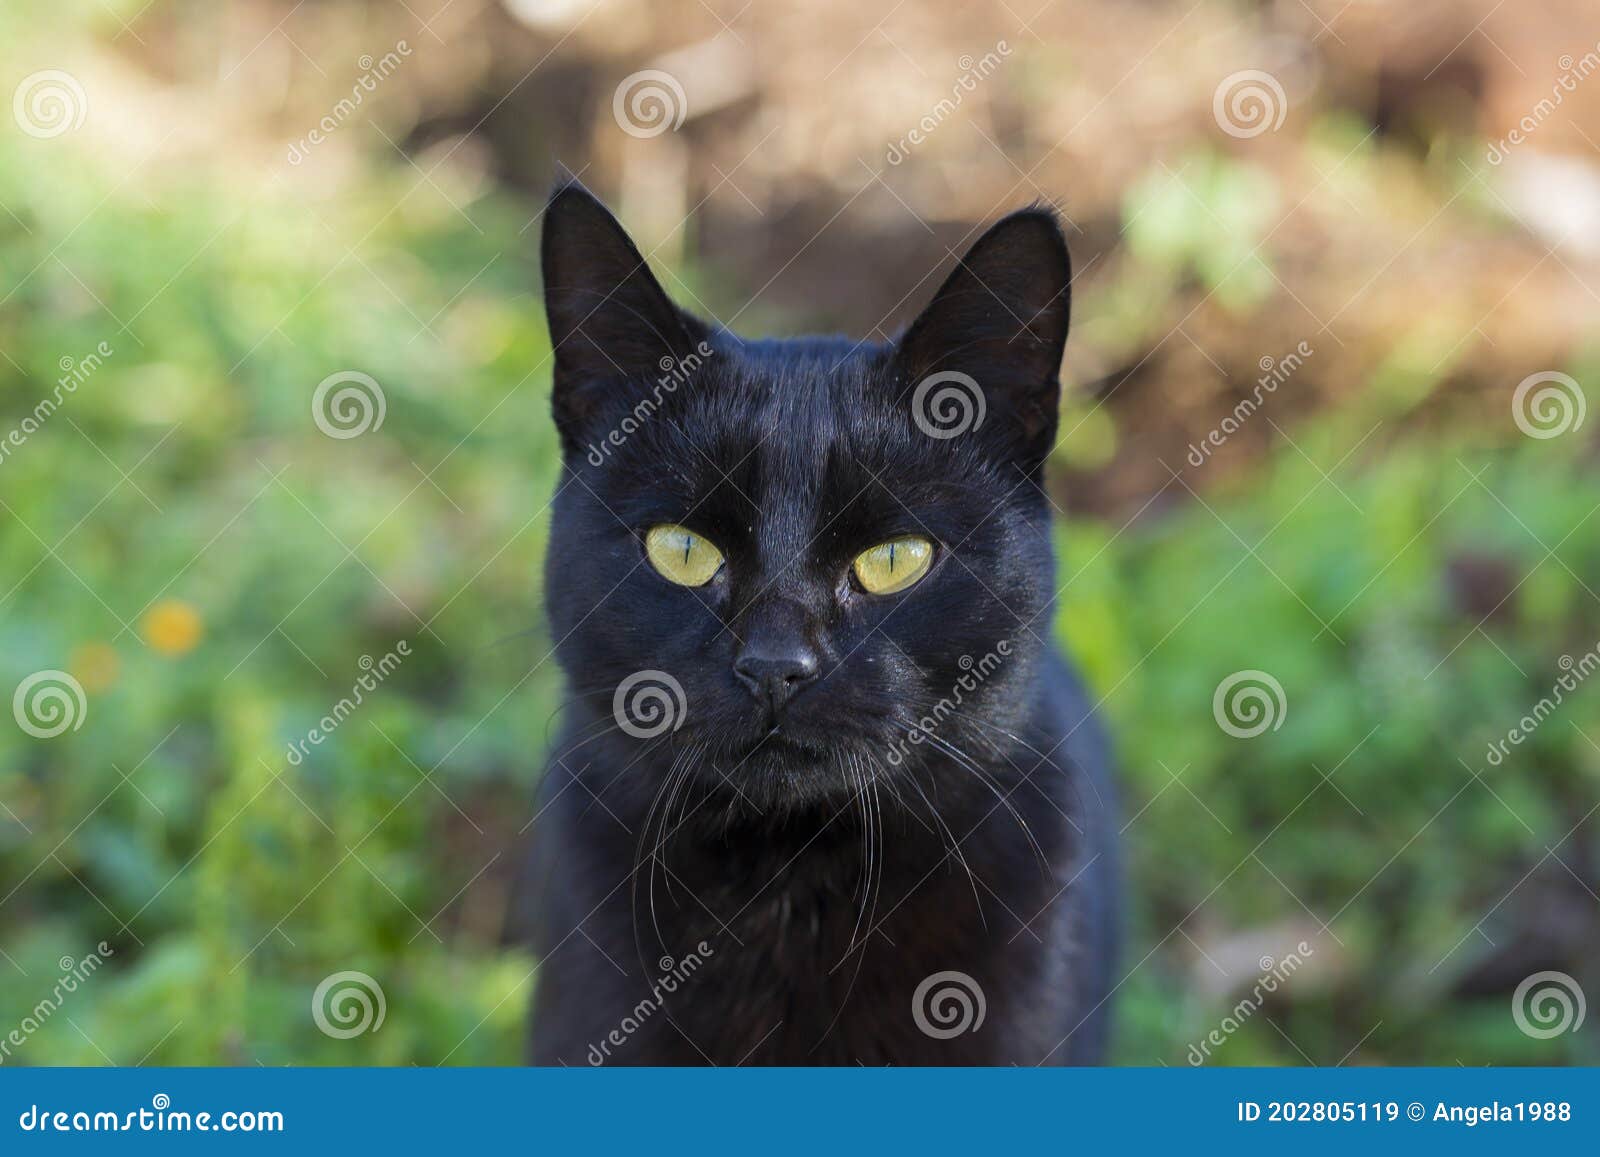 black domestic cat in the nature